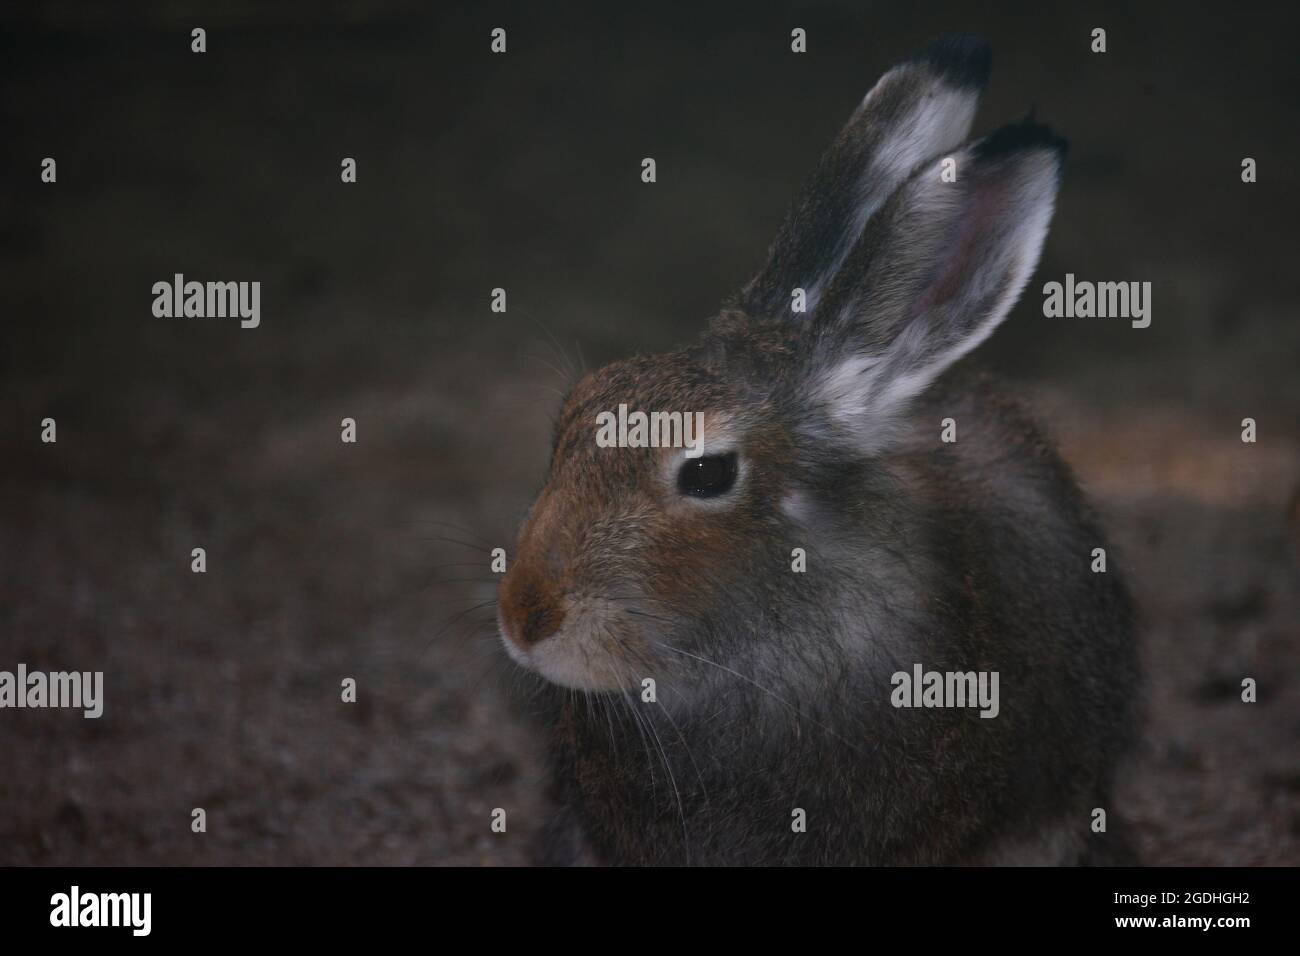 Zwergkaninchen / Dwarf rabbit / Oryctolagus cuniculus f. domestica Stock Photo